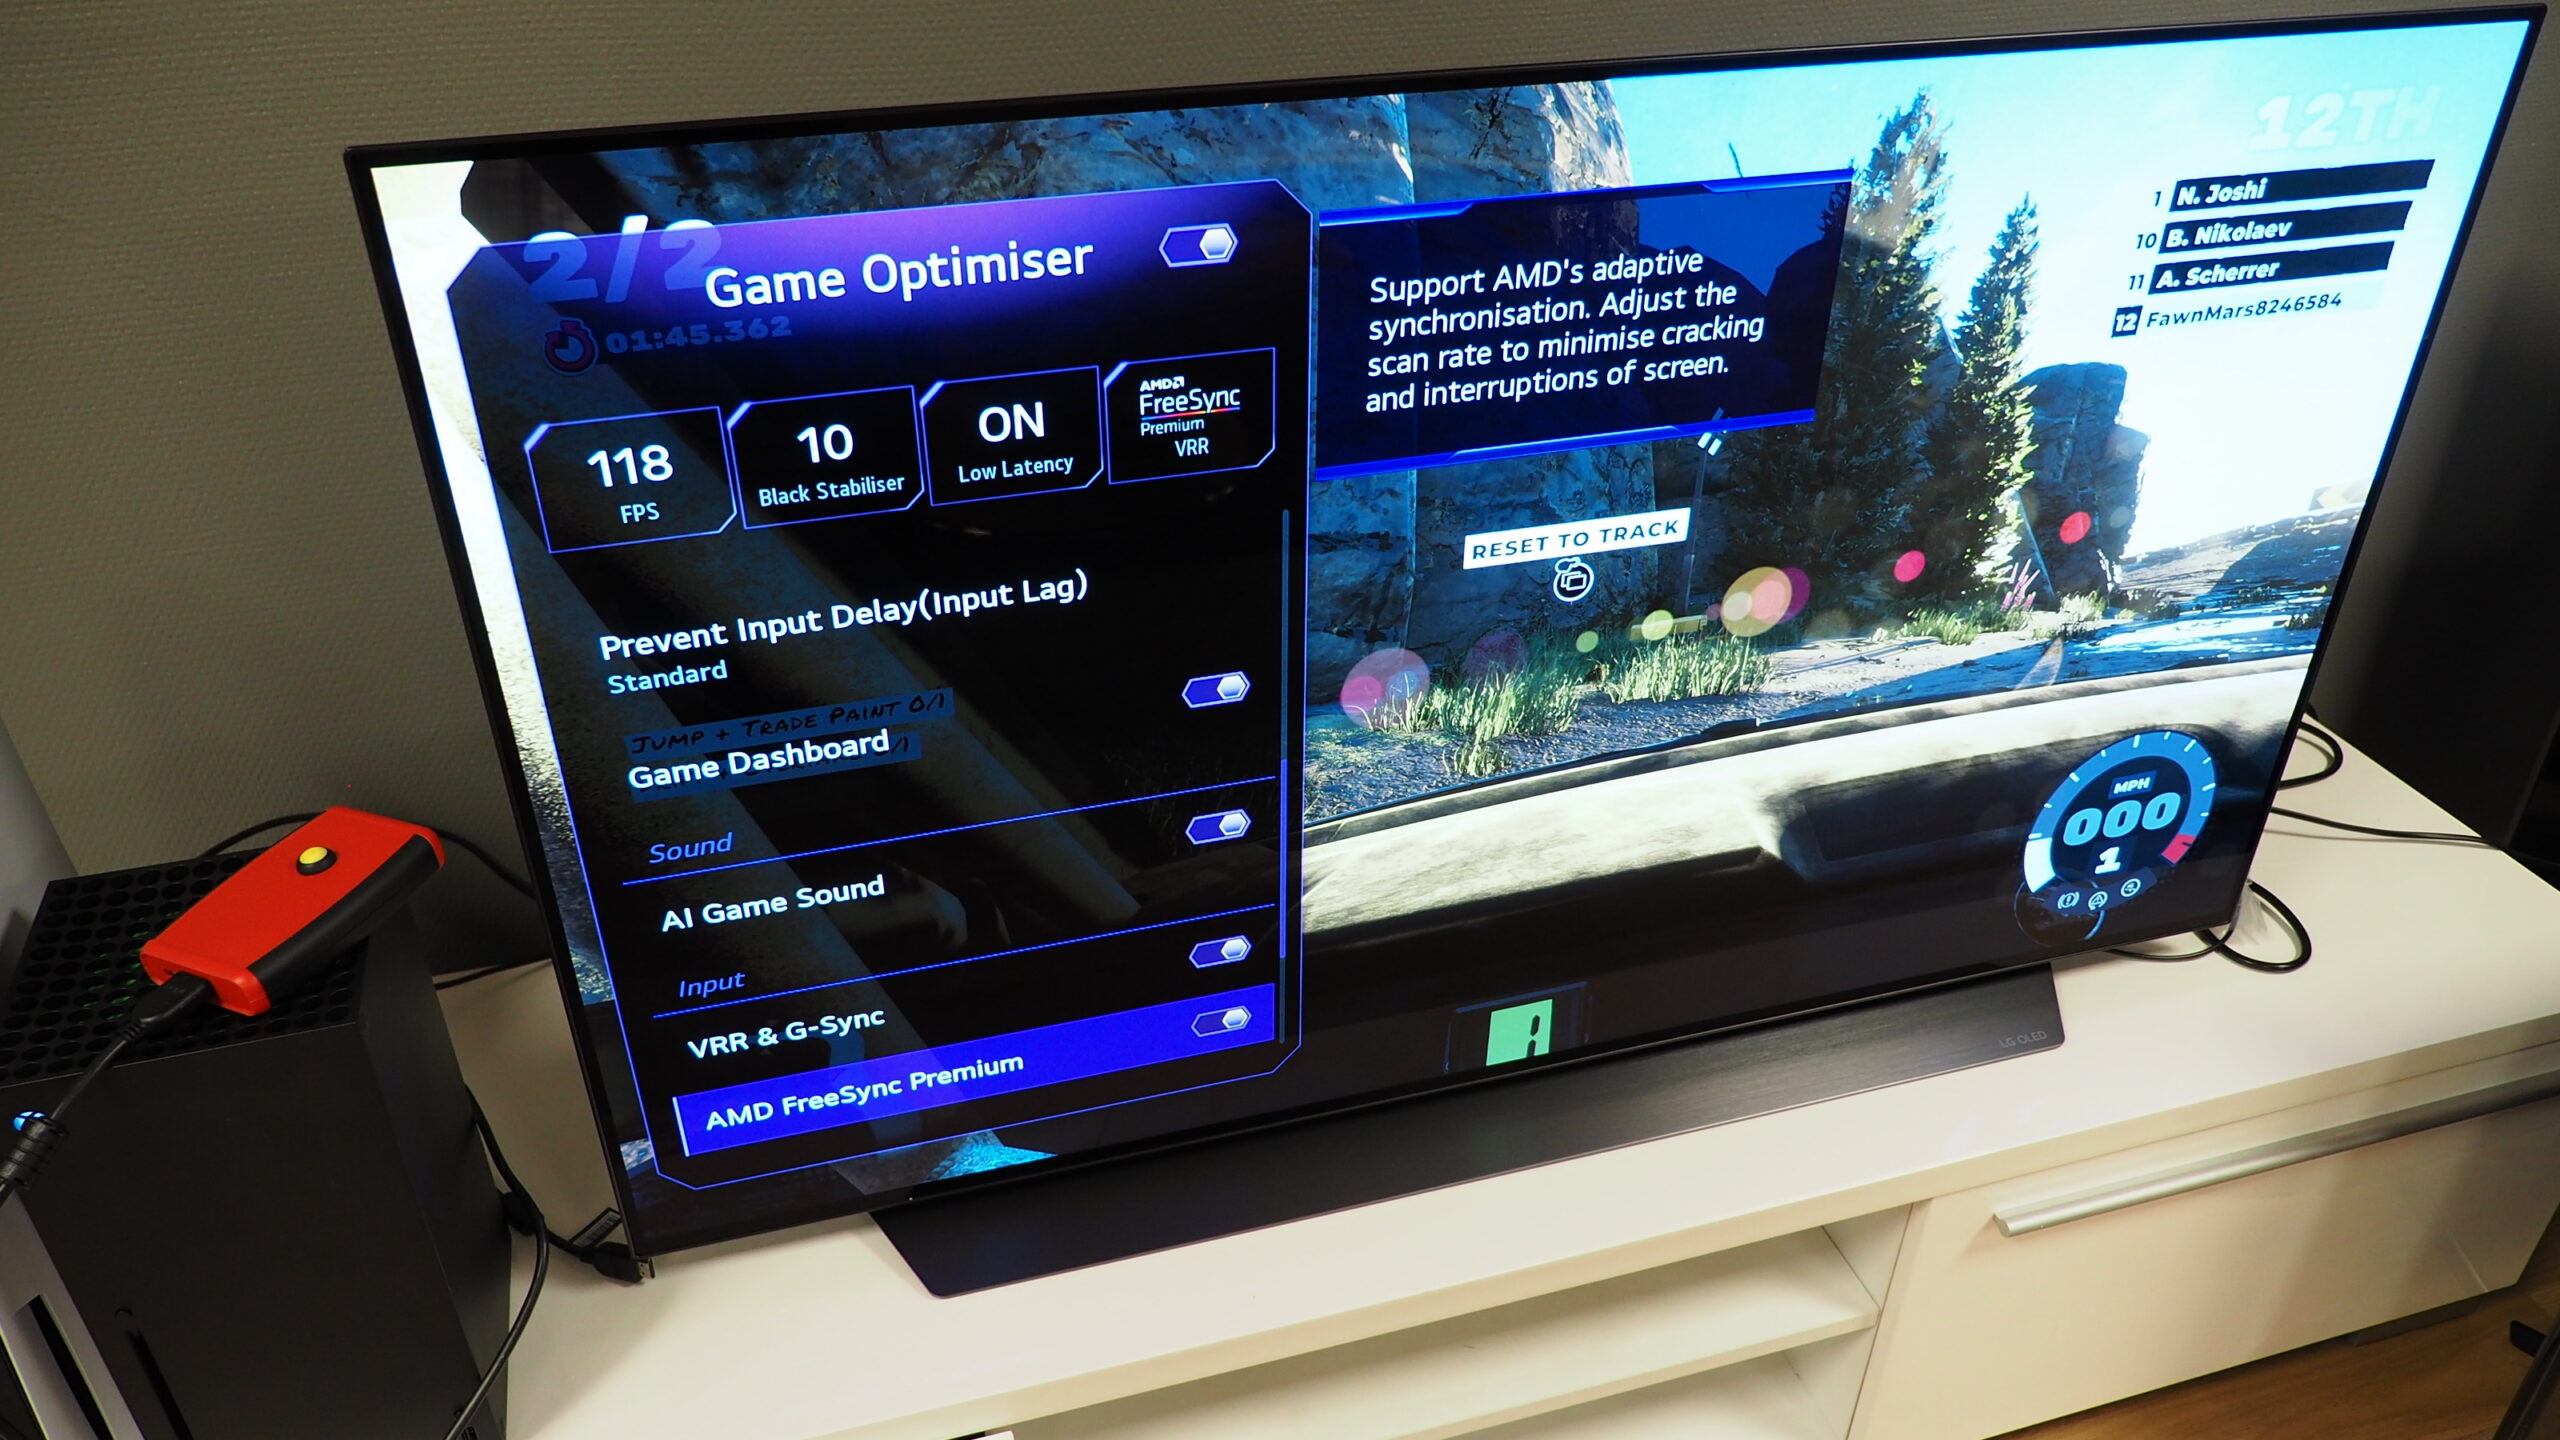 LG Game Optmiser menu scaled 1